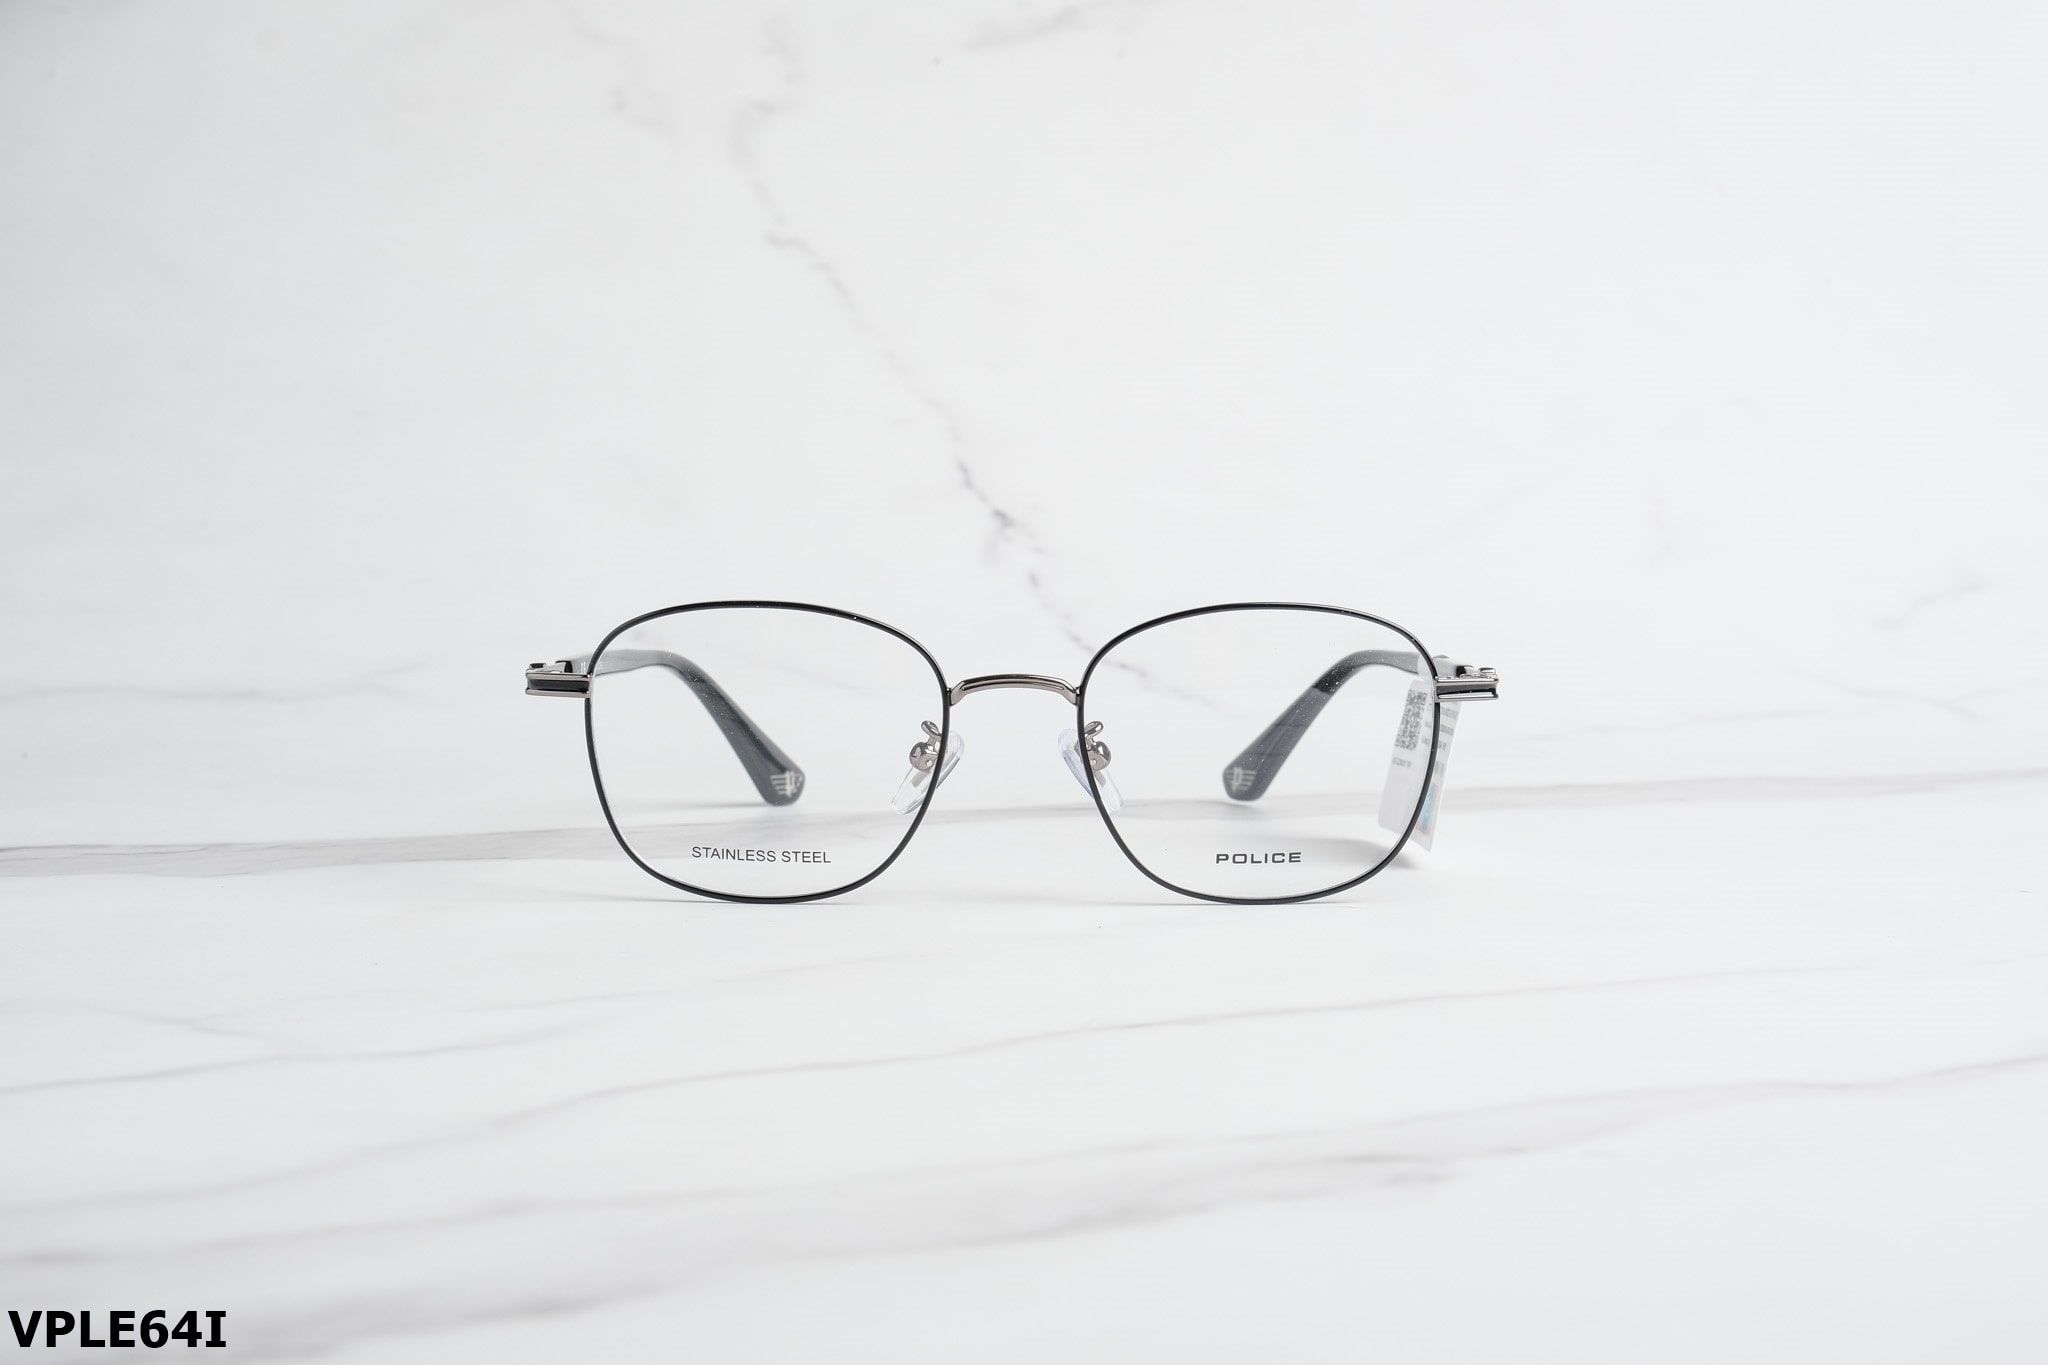  Police Eyewear - Glasses - VPLE64I 